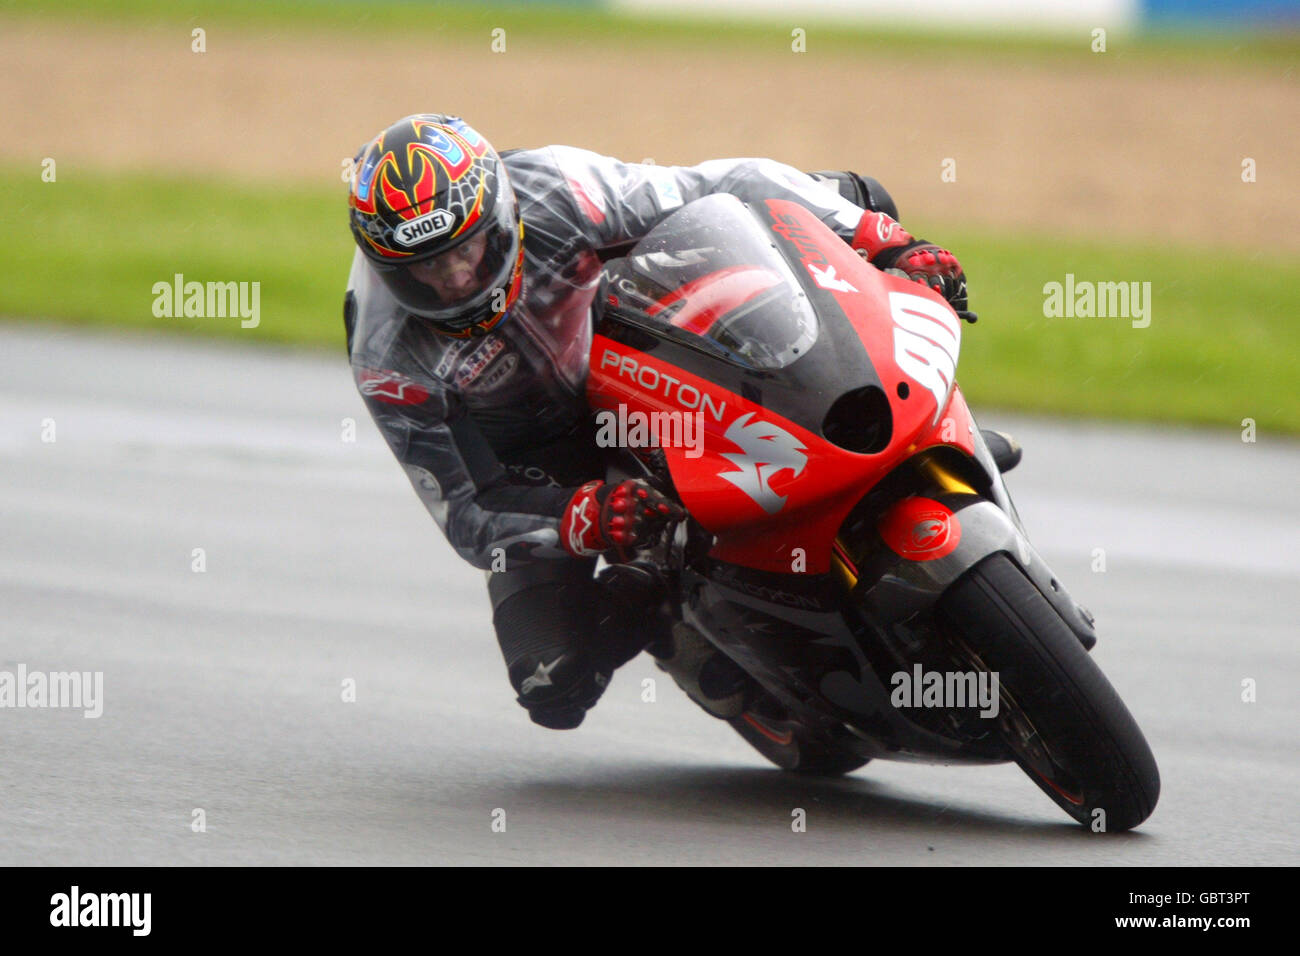 Motorcycling - British Grand Prix - Moto GP - Race. Kurtis Roberts in  action Stock Photo - Alamy